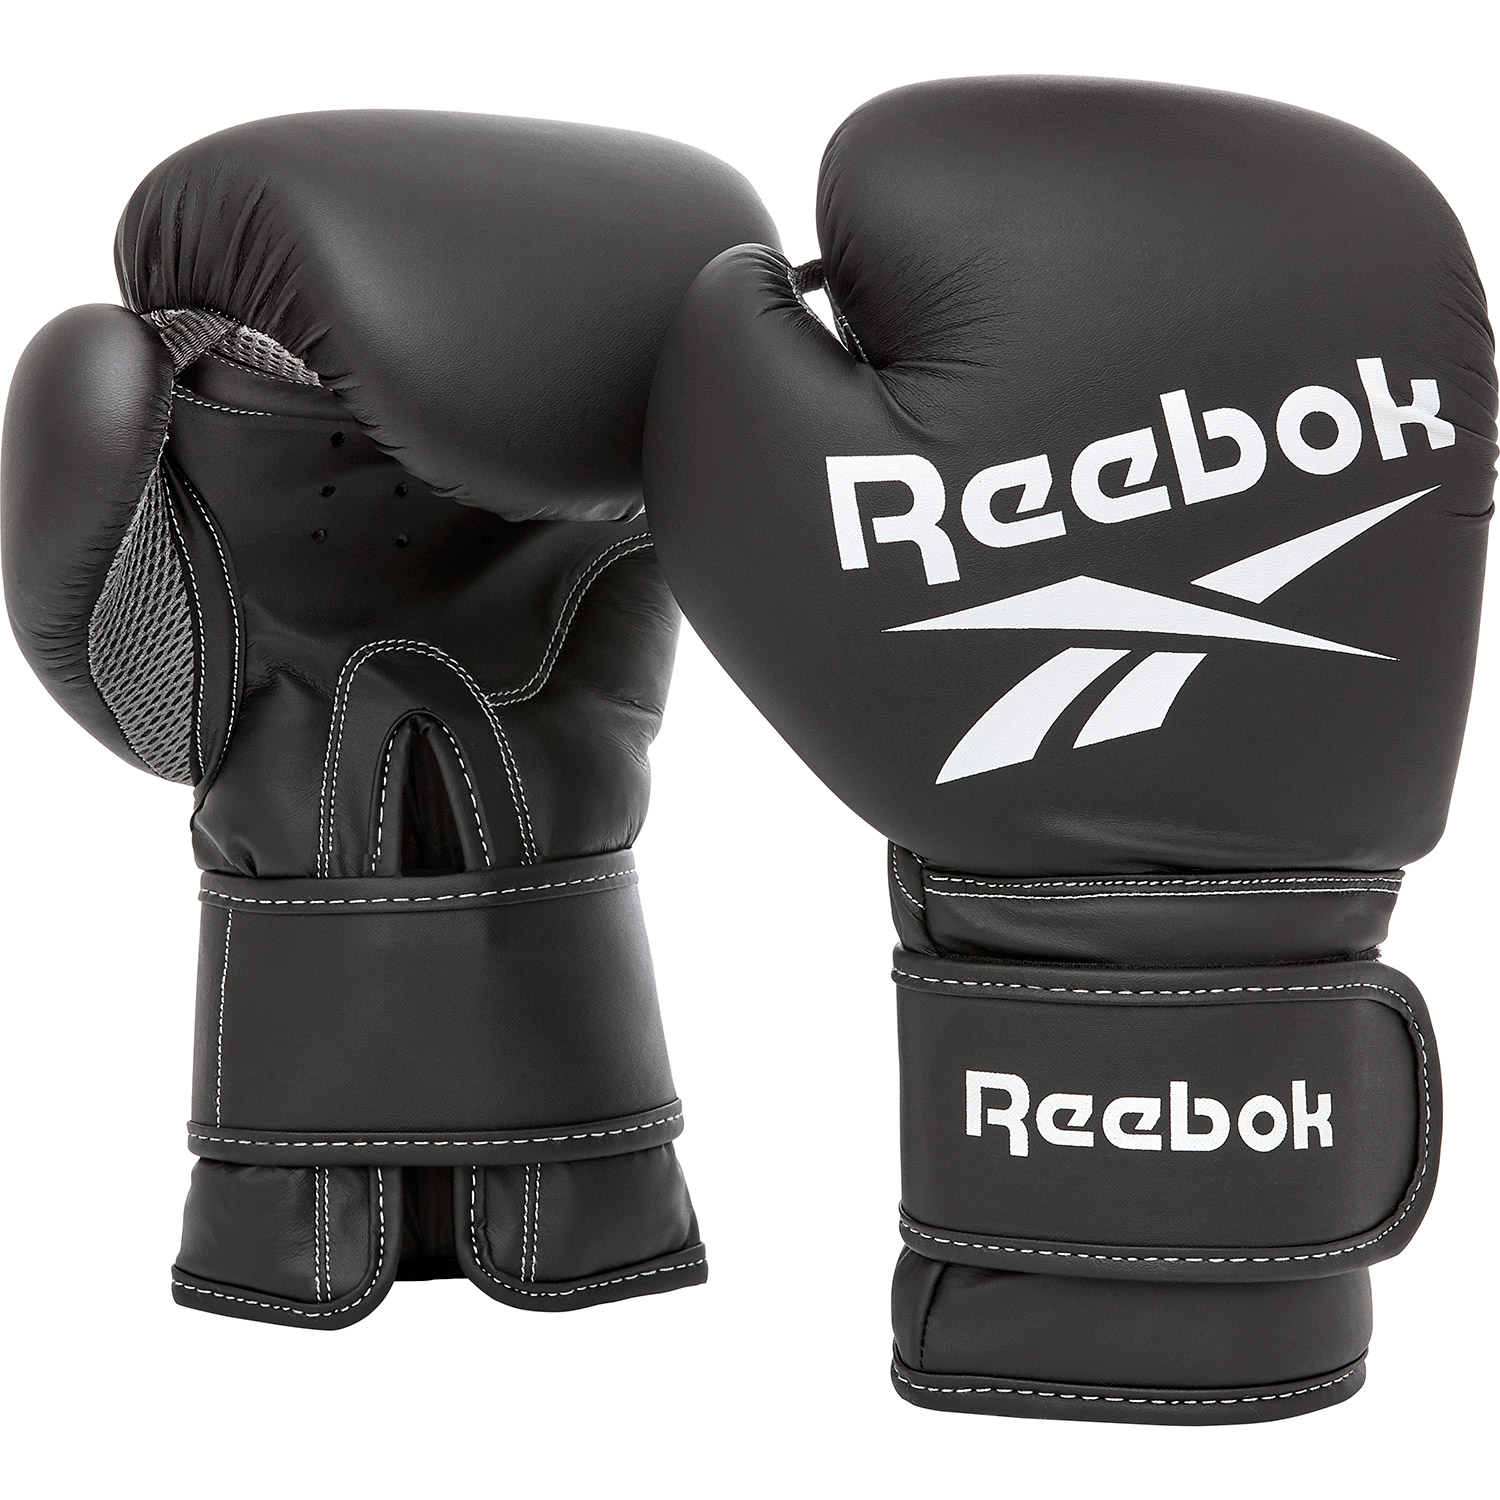 Reebok boxing gloves black 14 oz